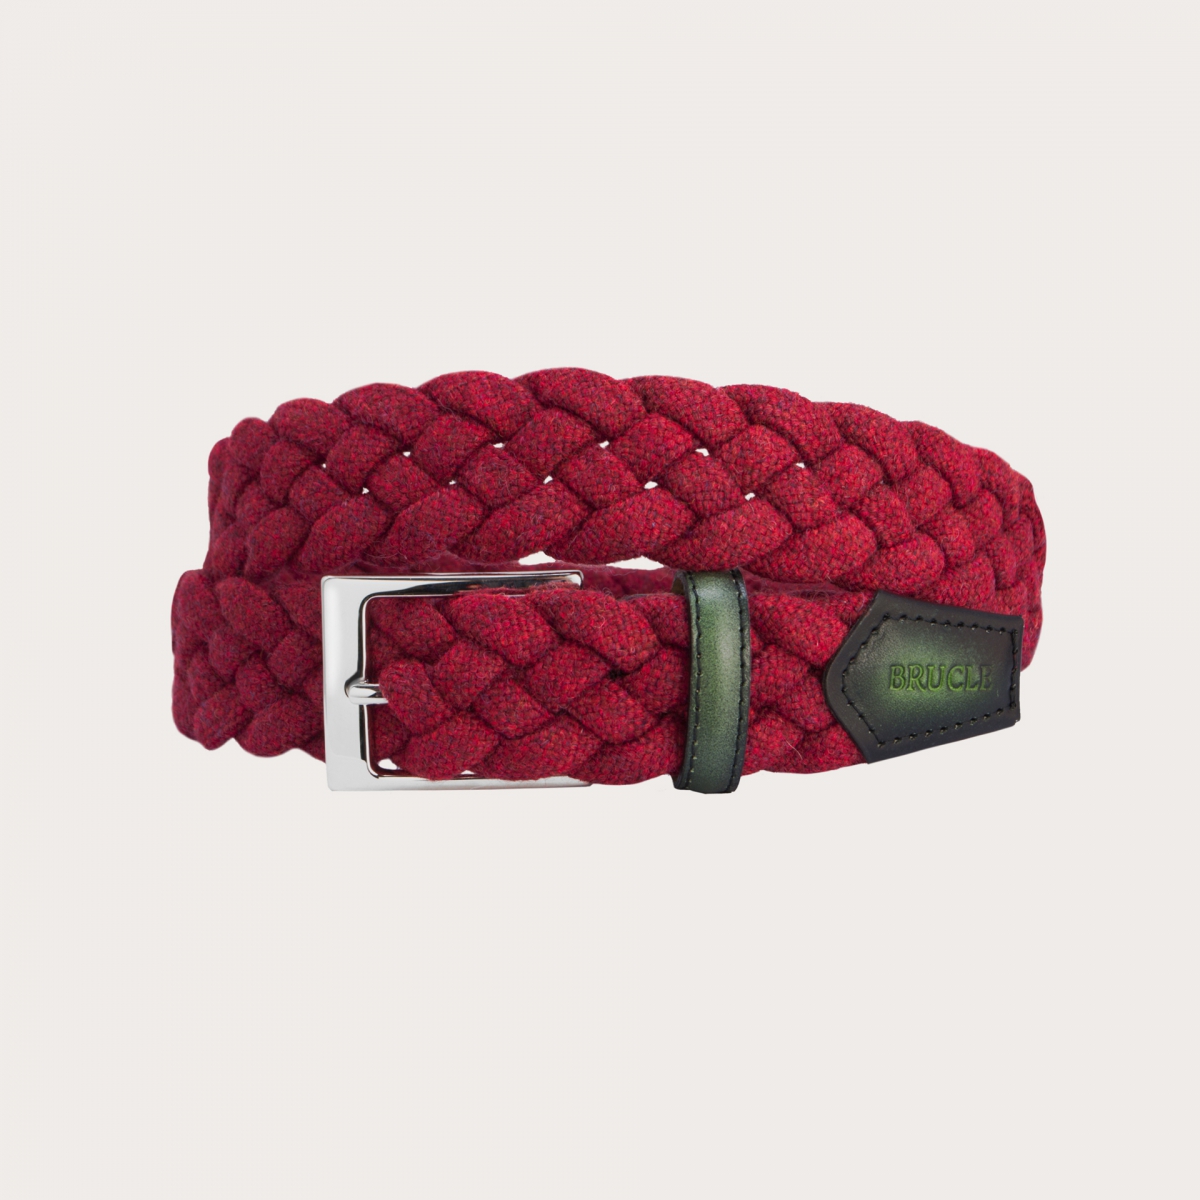 Cintura intrecciata elastica in lana, rossa con pelle sfumata